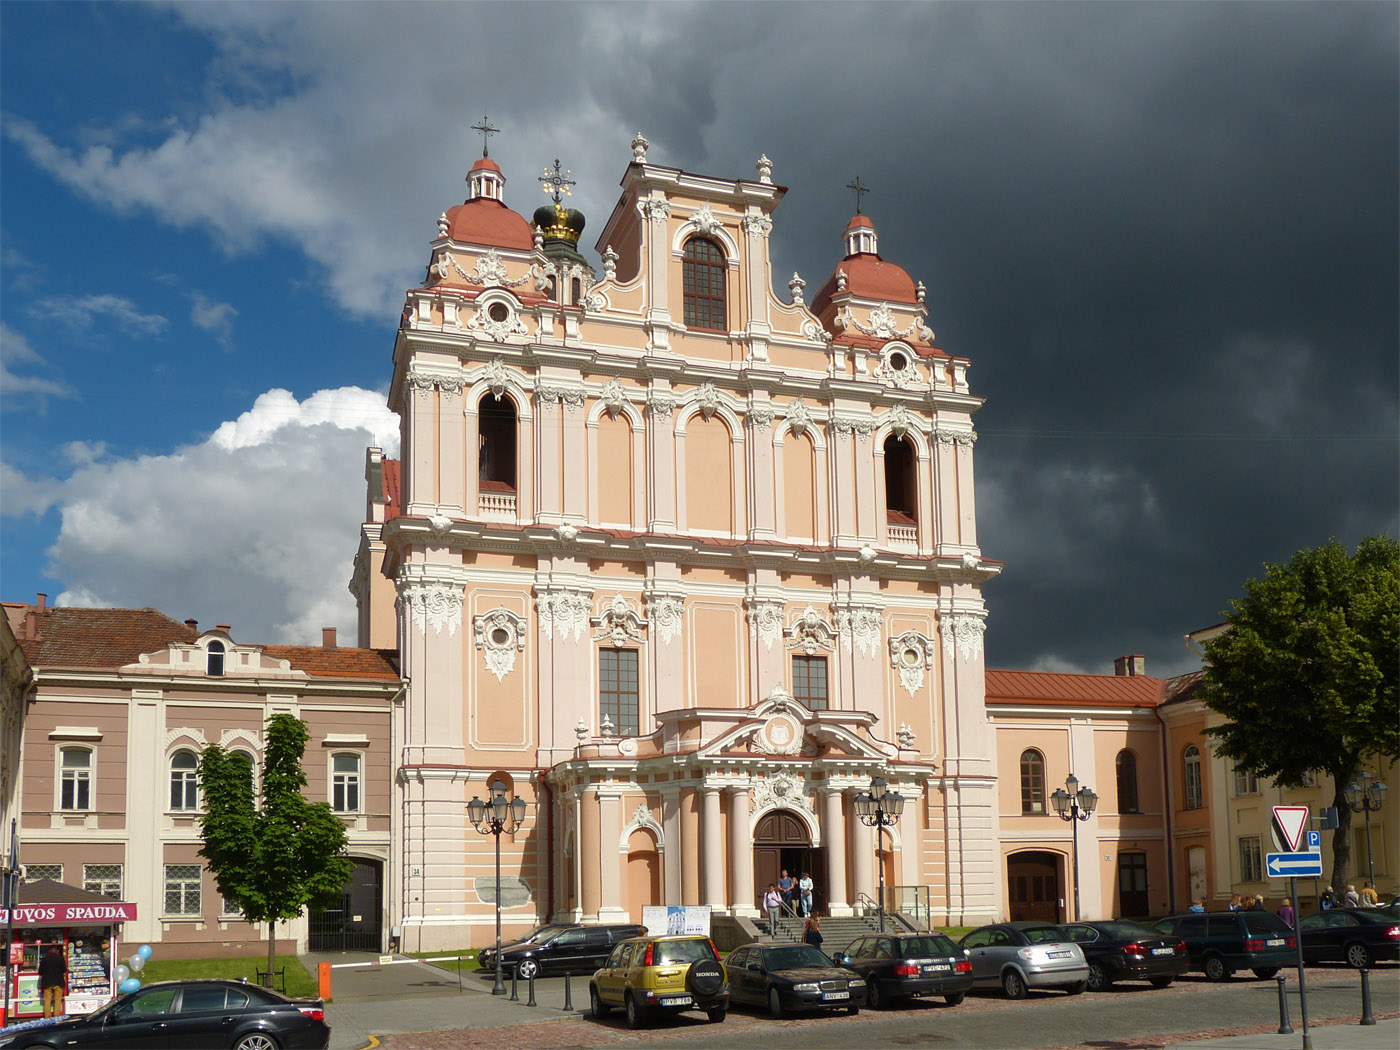 St Casimir's Church, Vilnius, Lithuania